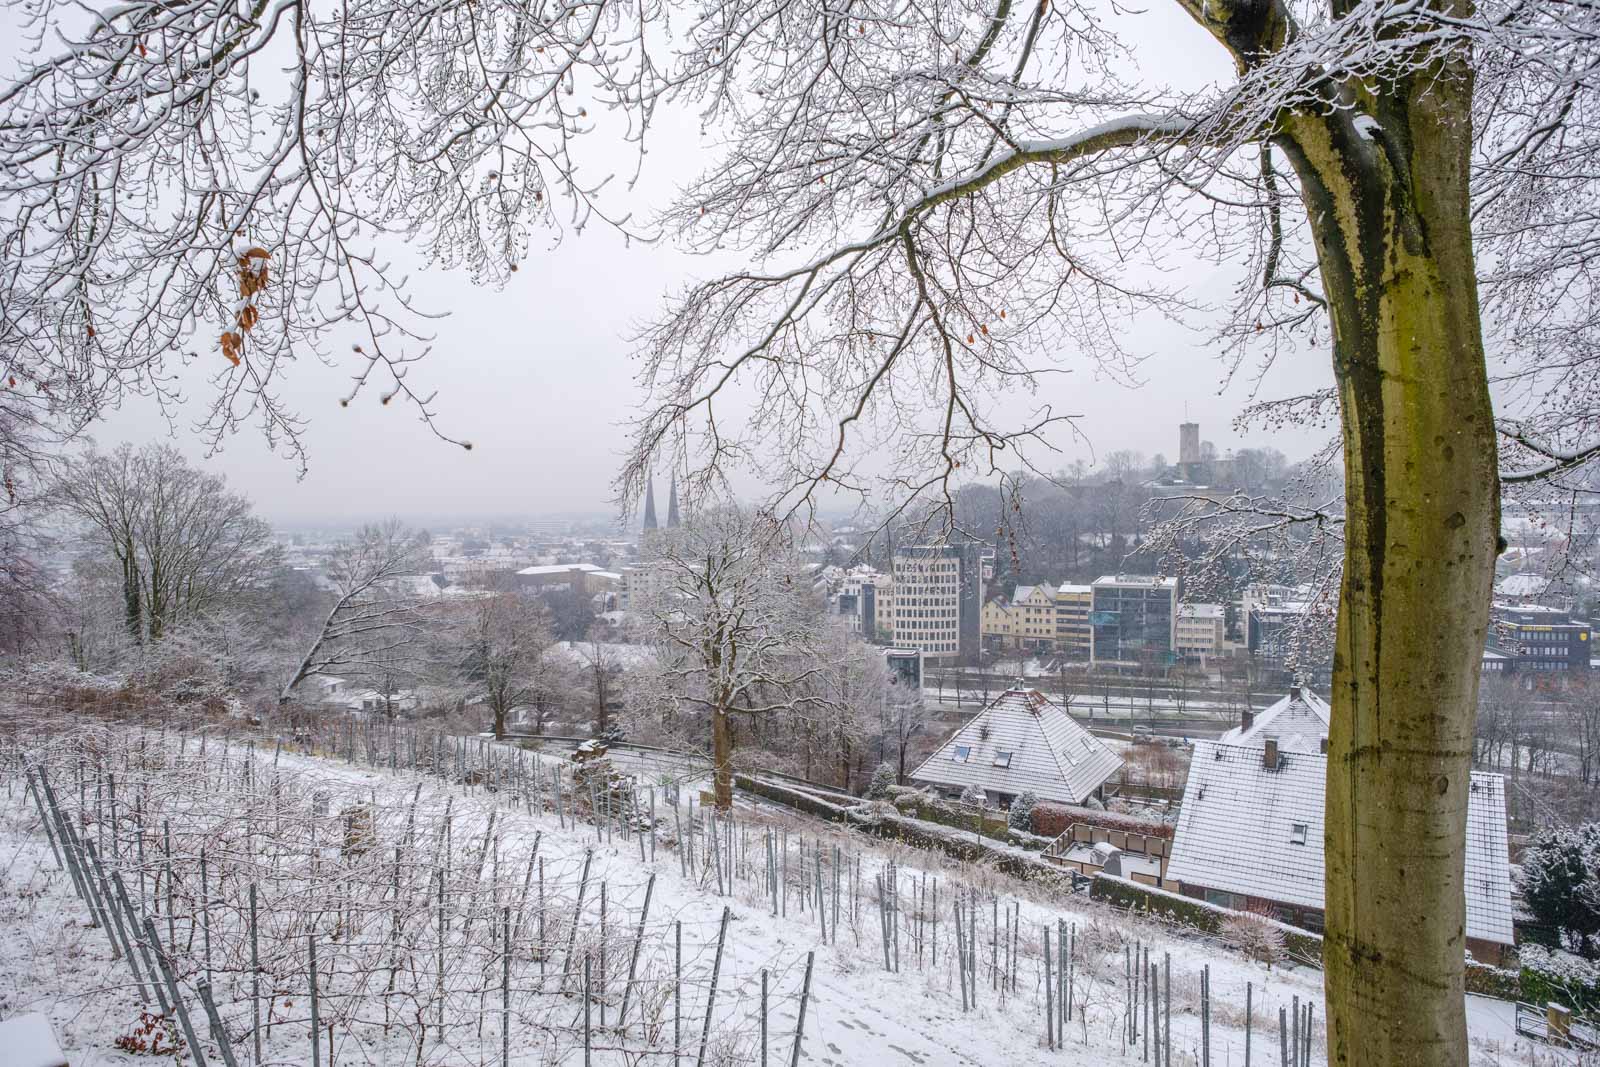 Snow on the 'Johannisberg' on January 24, 2021 (Bielefeld, Germany).